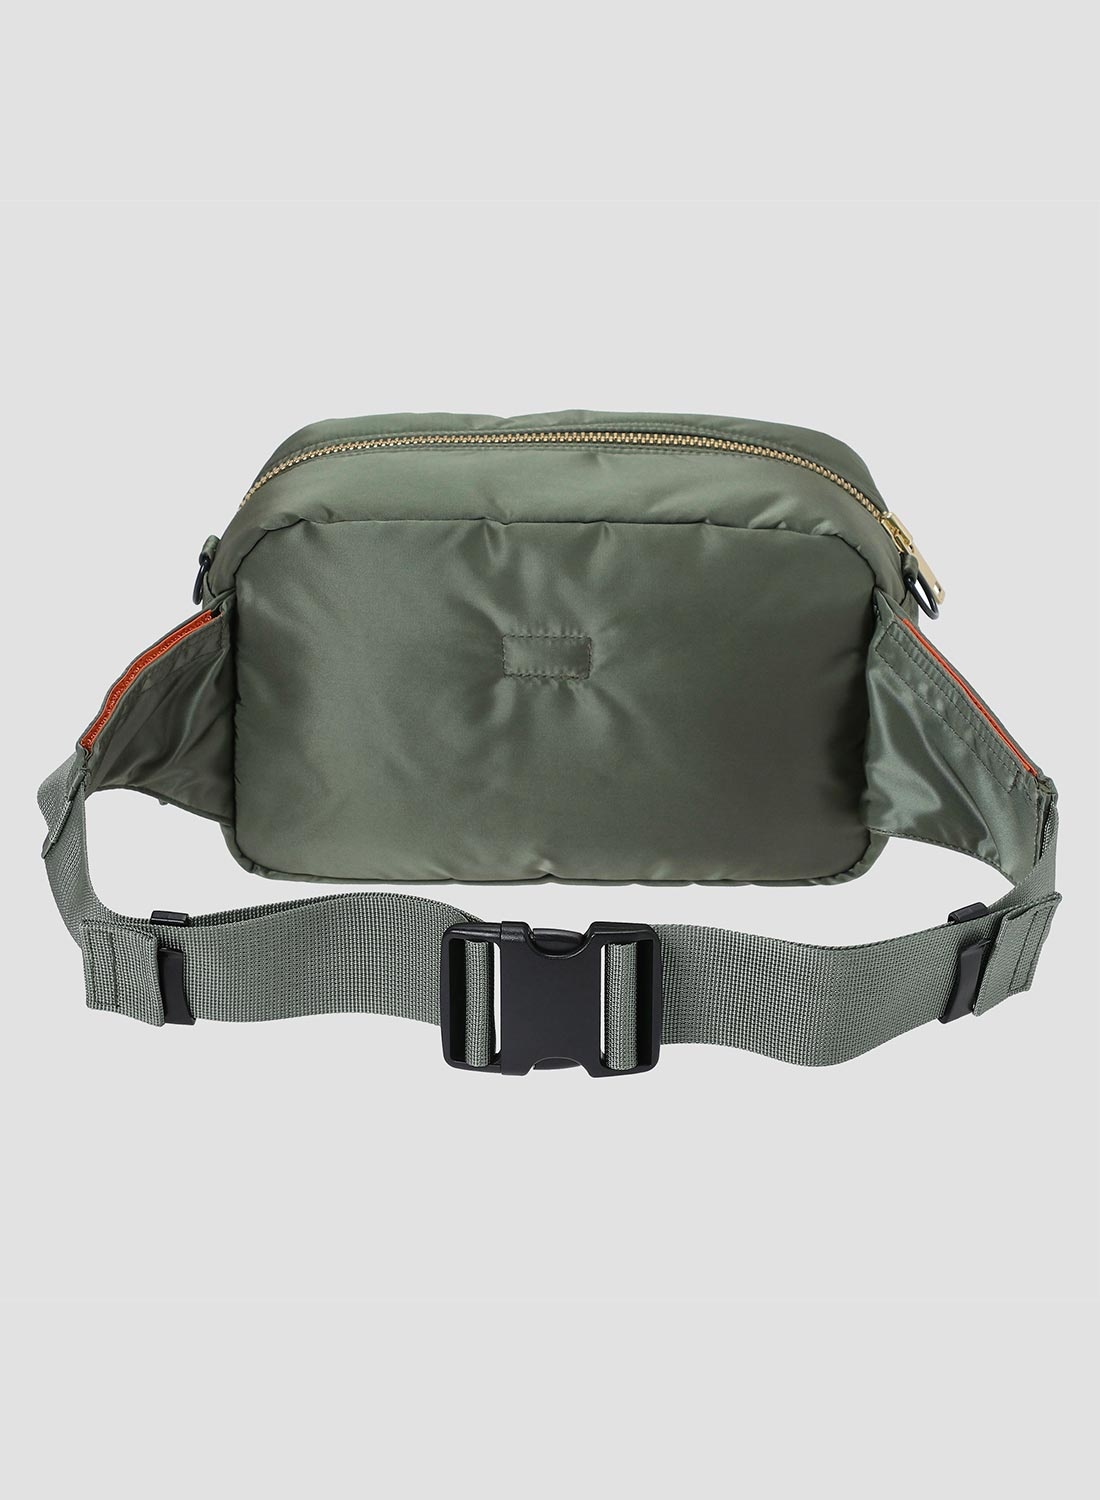 Porter-Yoshida & Co Tanker Waist Bag in Sage Green - 5